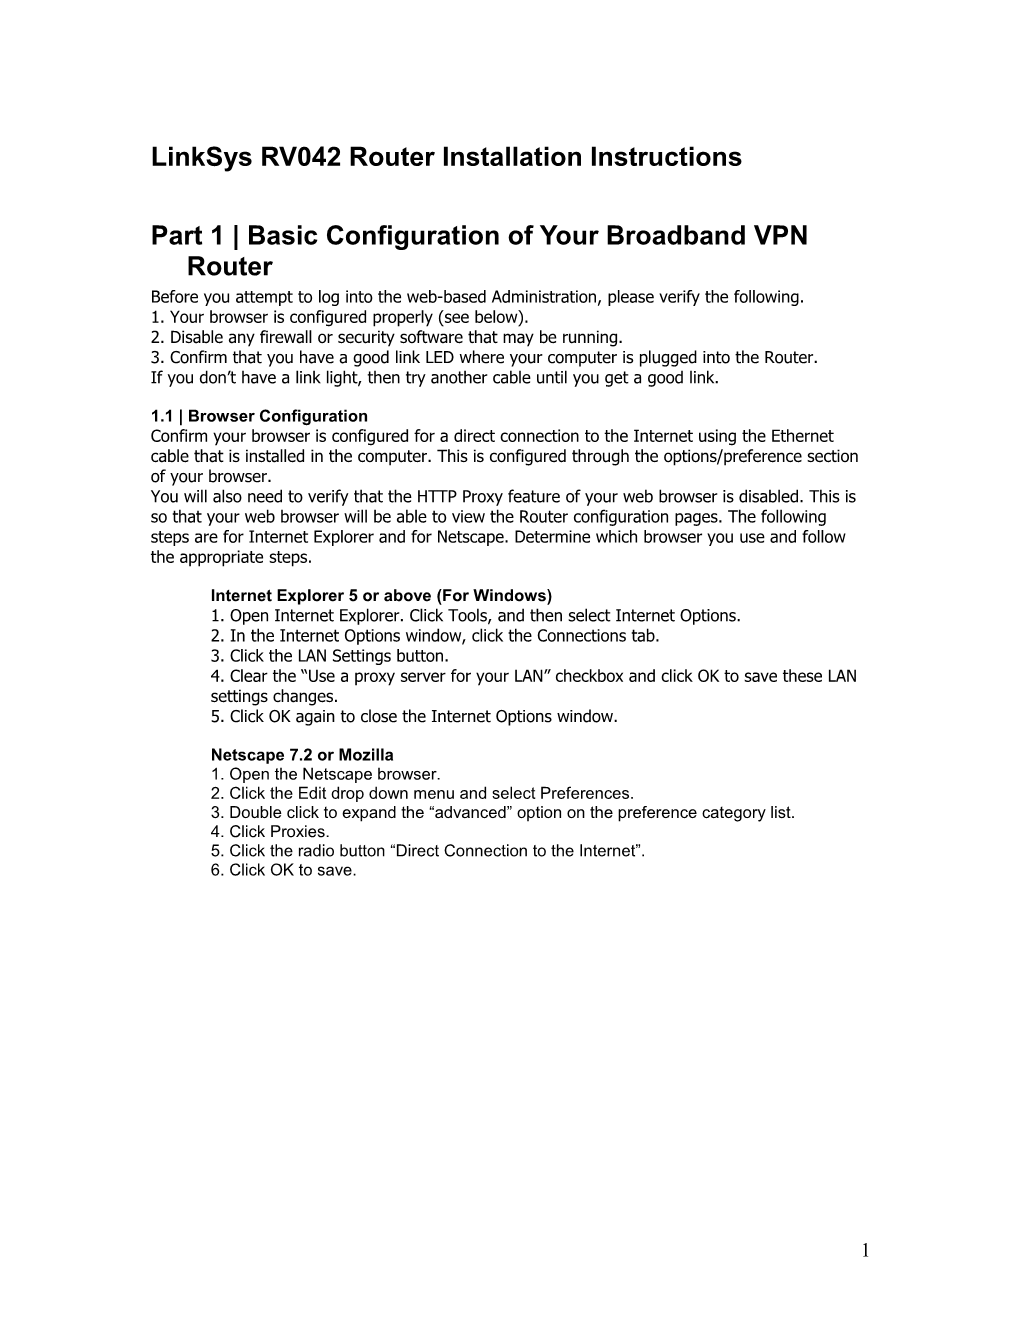 1 Configuring Your Broadband VPN Router